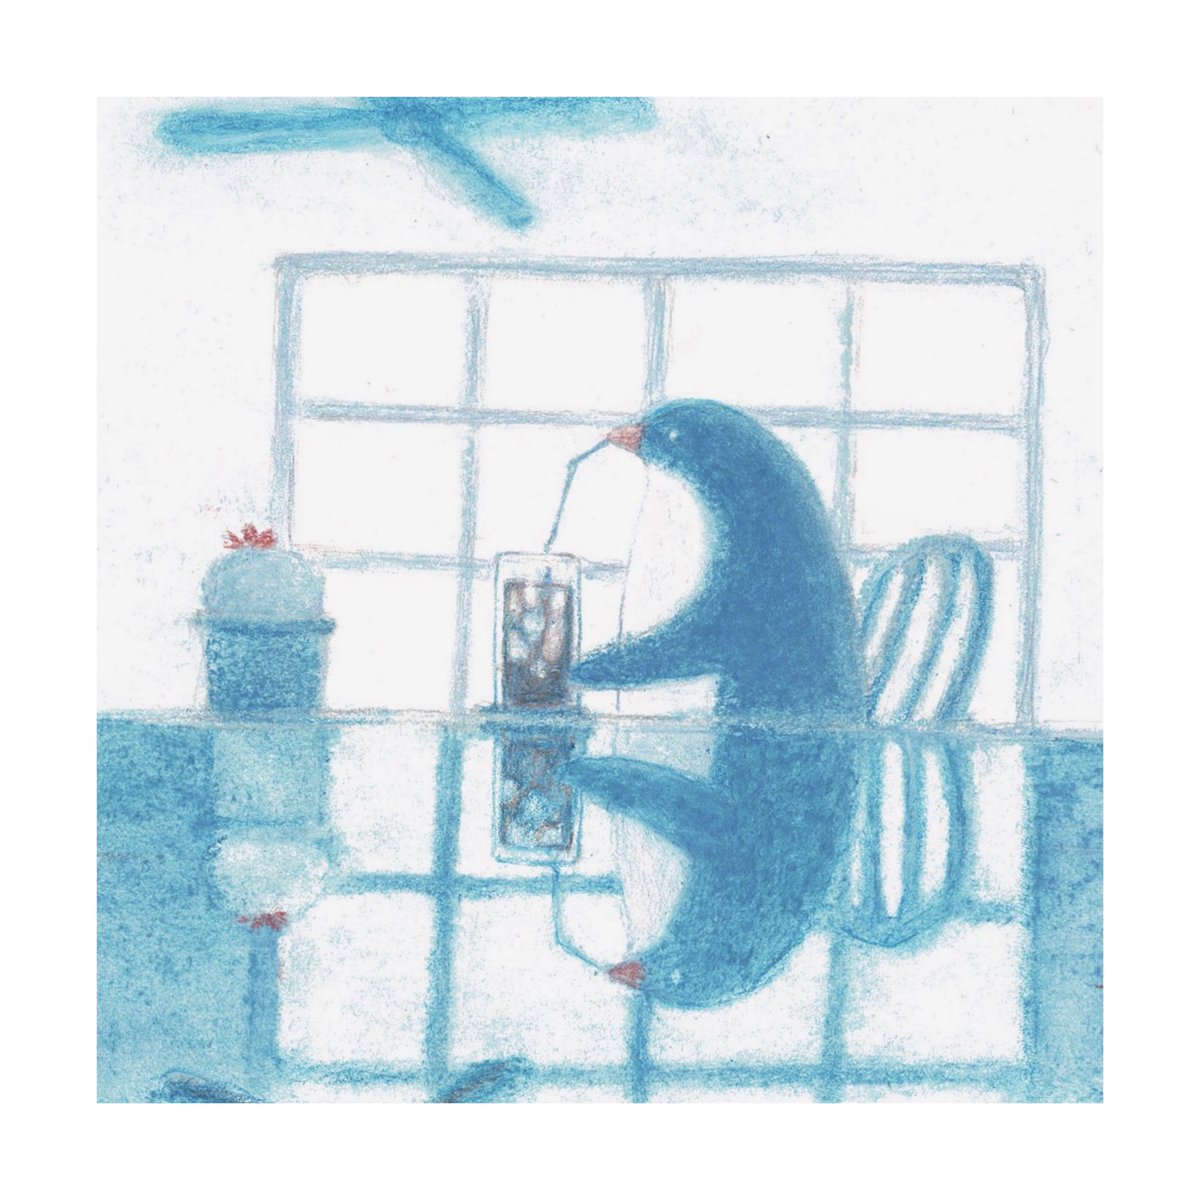 no humans penguin bird chair sitting drinking straw window  illustration images